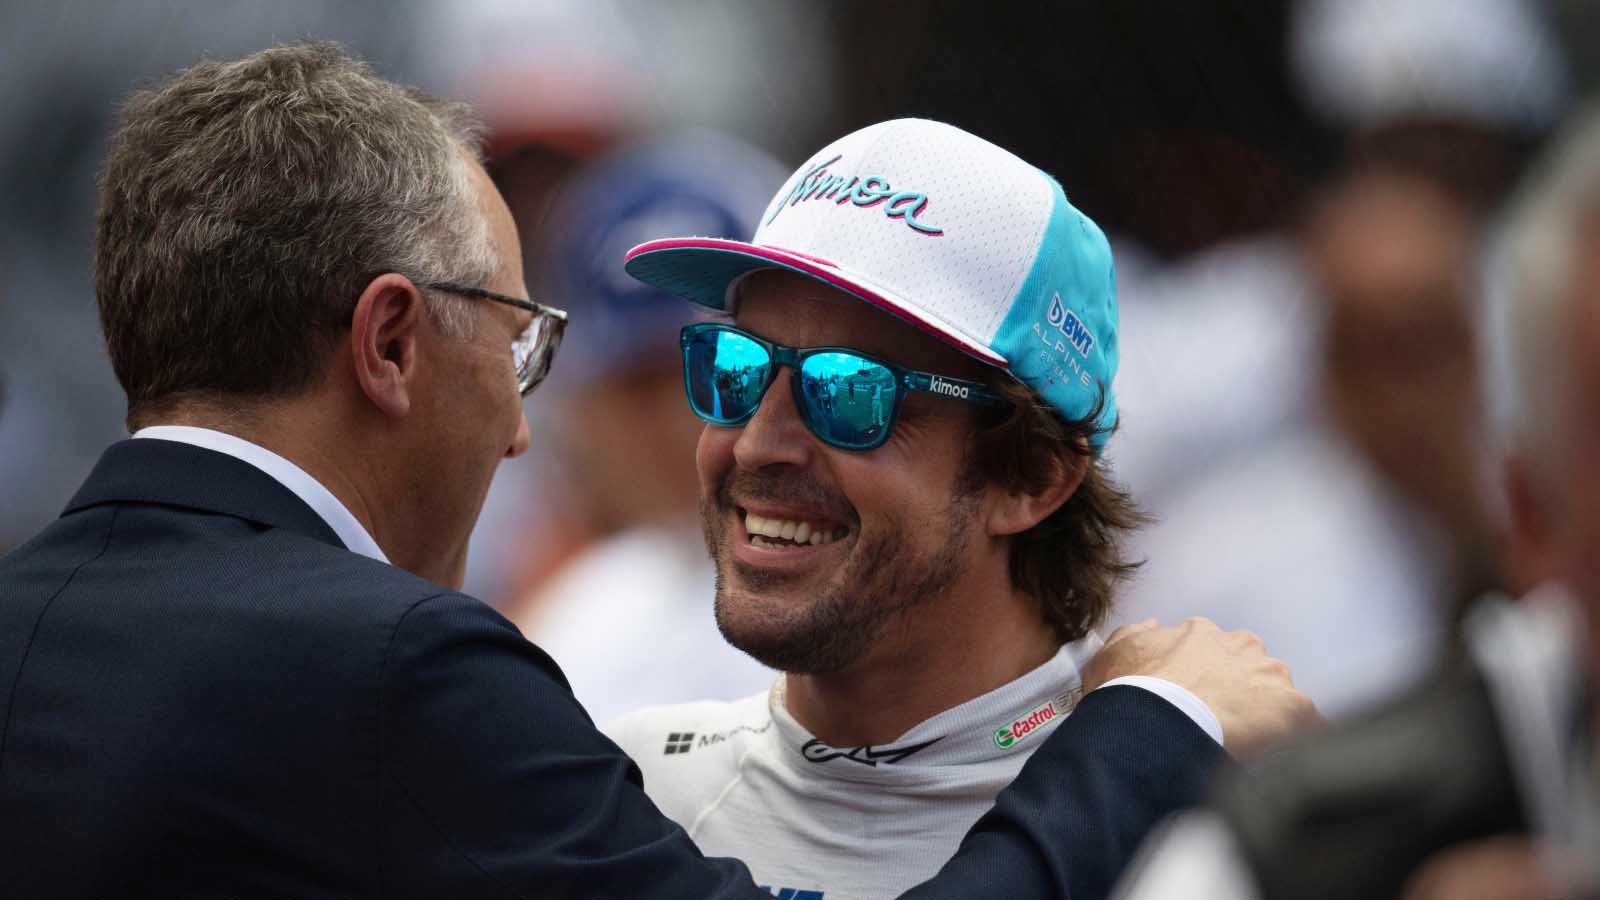 Fernando Alonso with Stefano Domenicali. Miami May 2022.